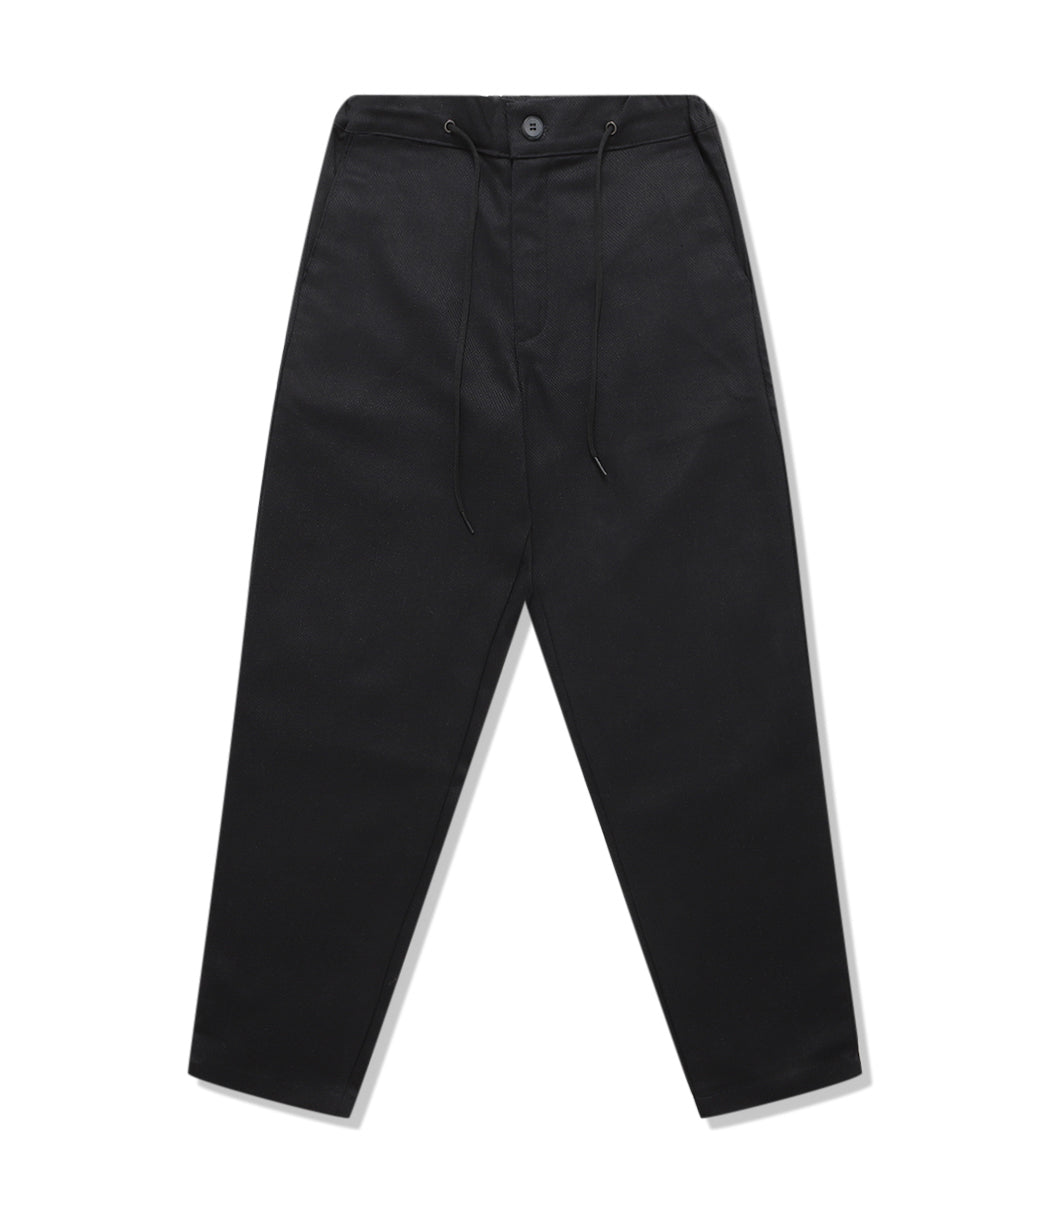 Wafer Black Pants Size M